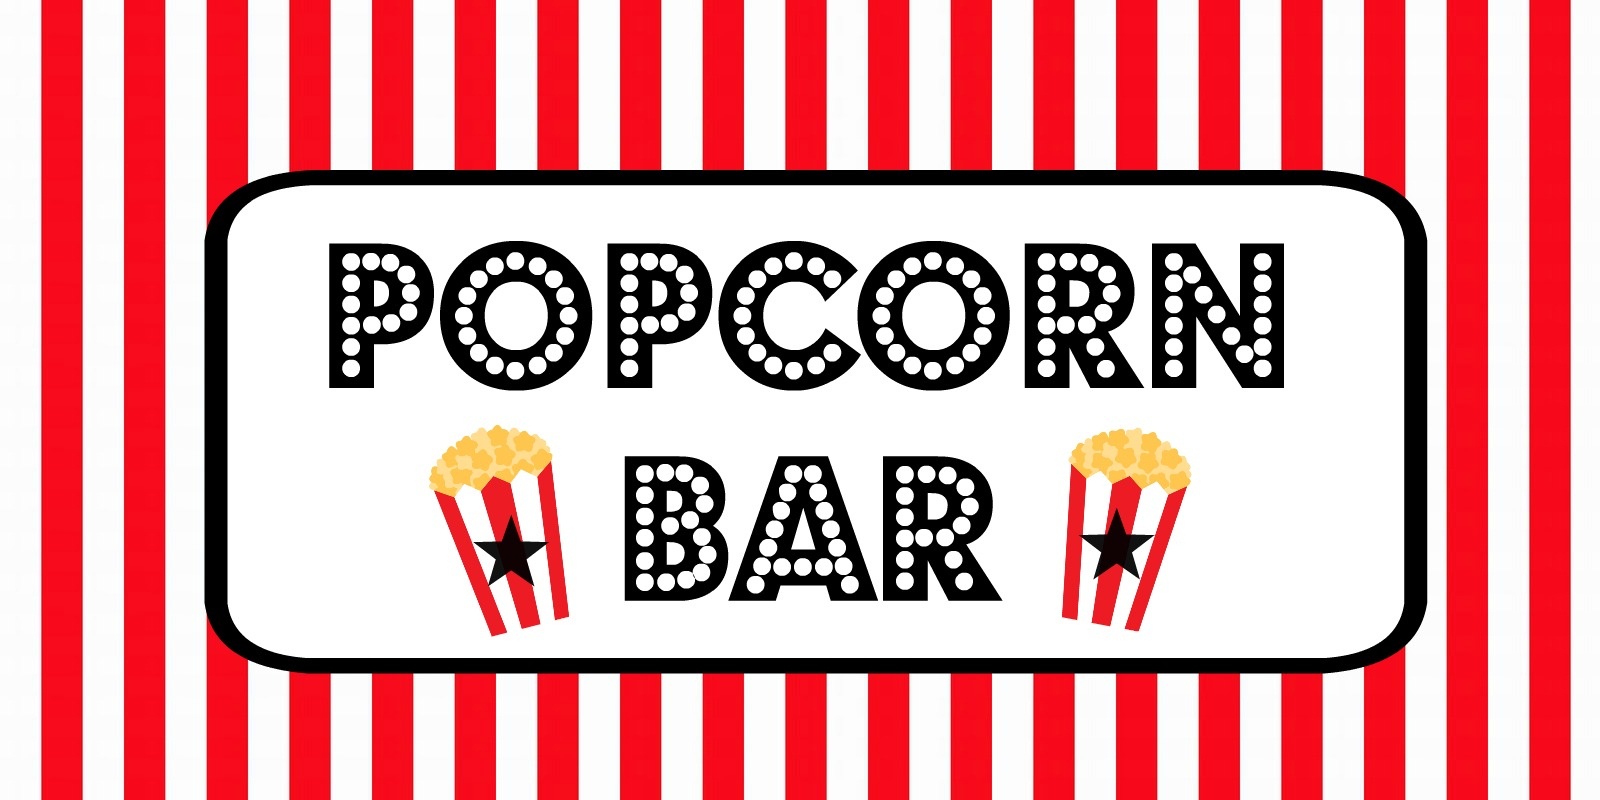 Free Movie Night / Popcorn Bar Printables - Popcorn Bar Sign Printable Free